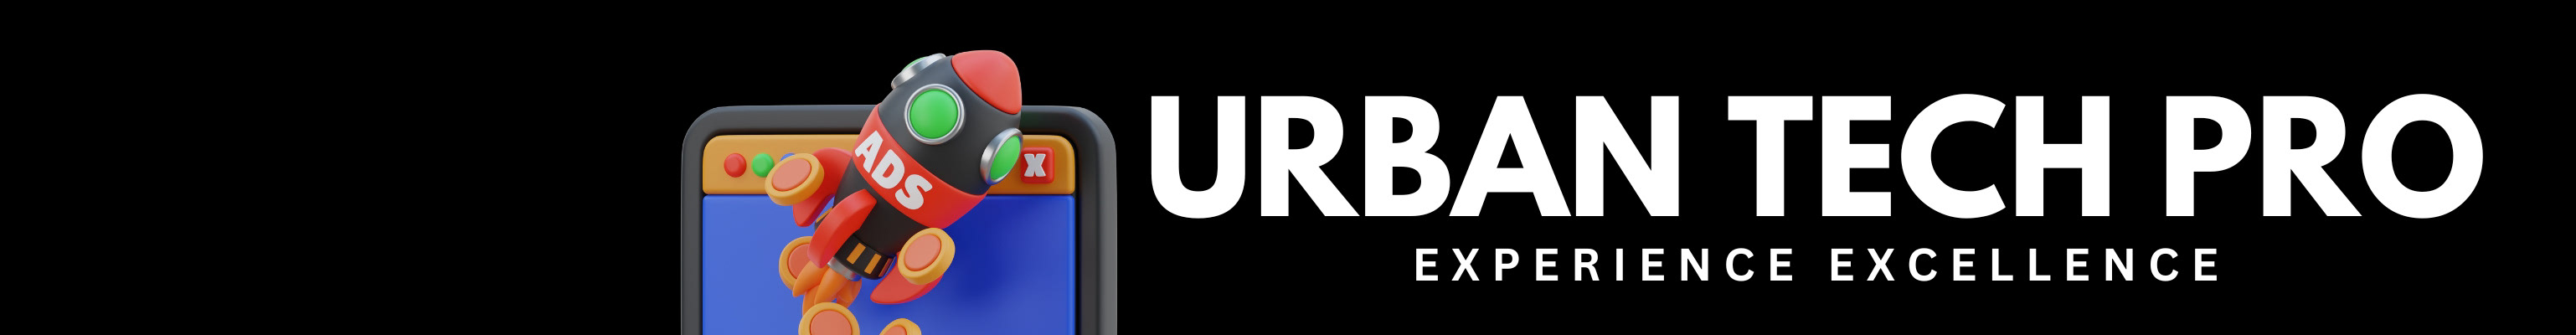 Urban Tech Pros profilbanner